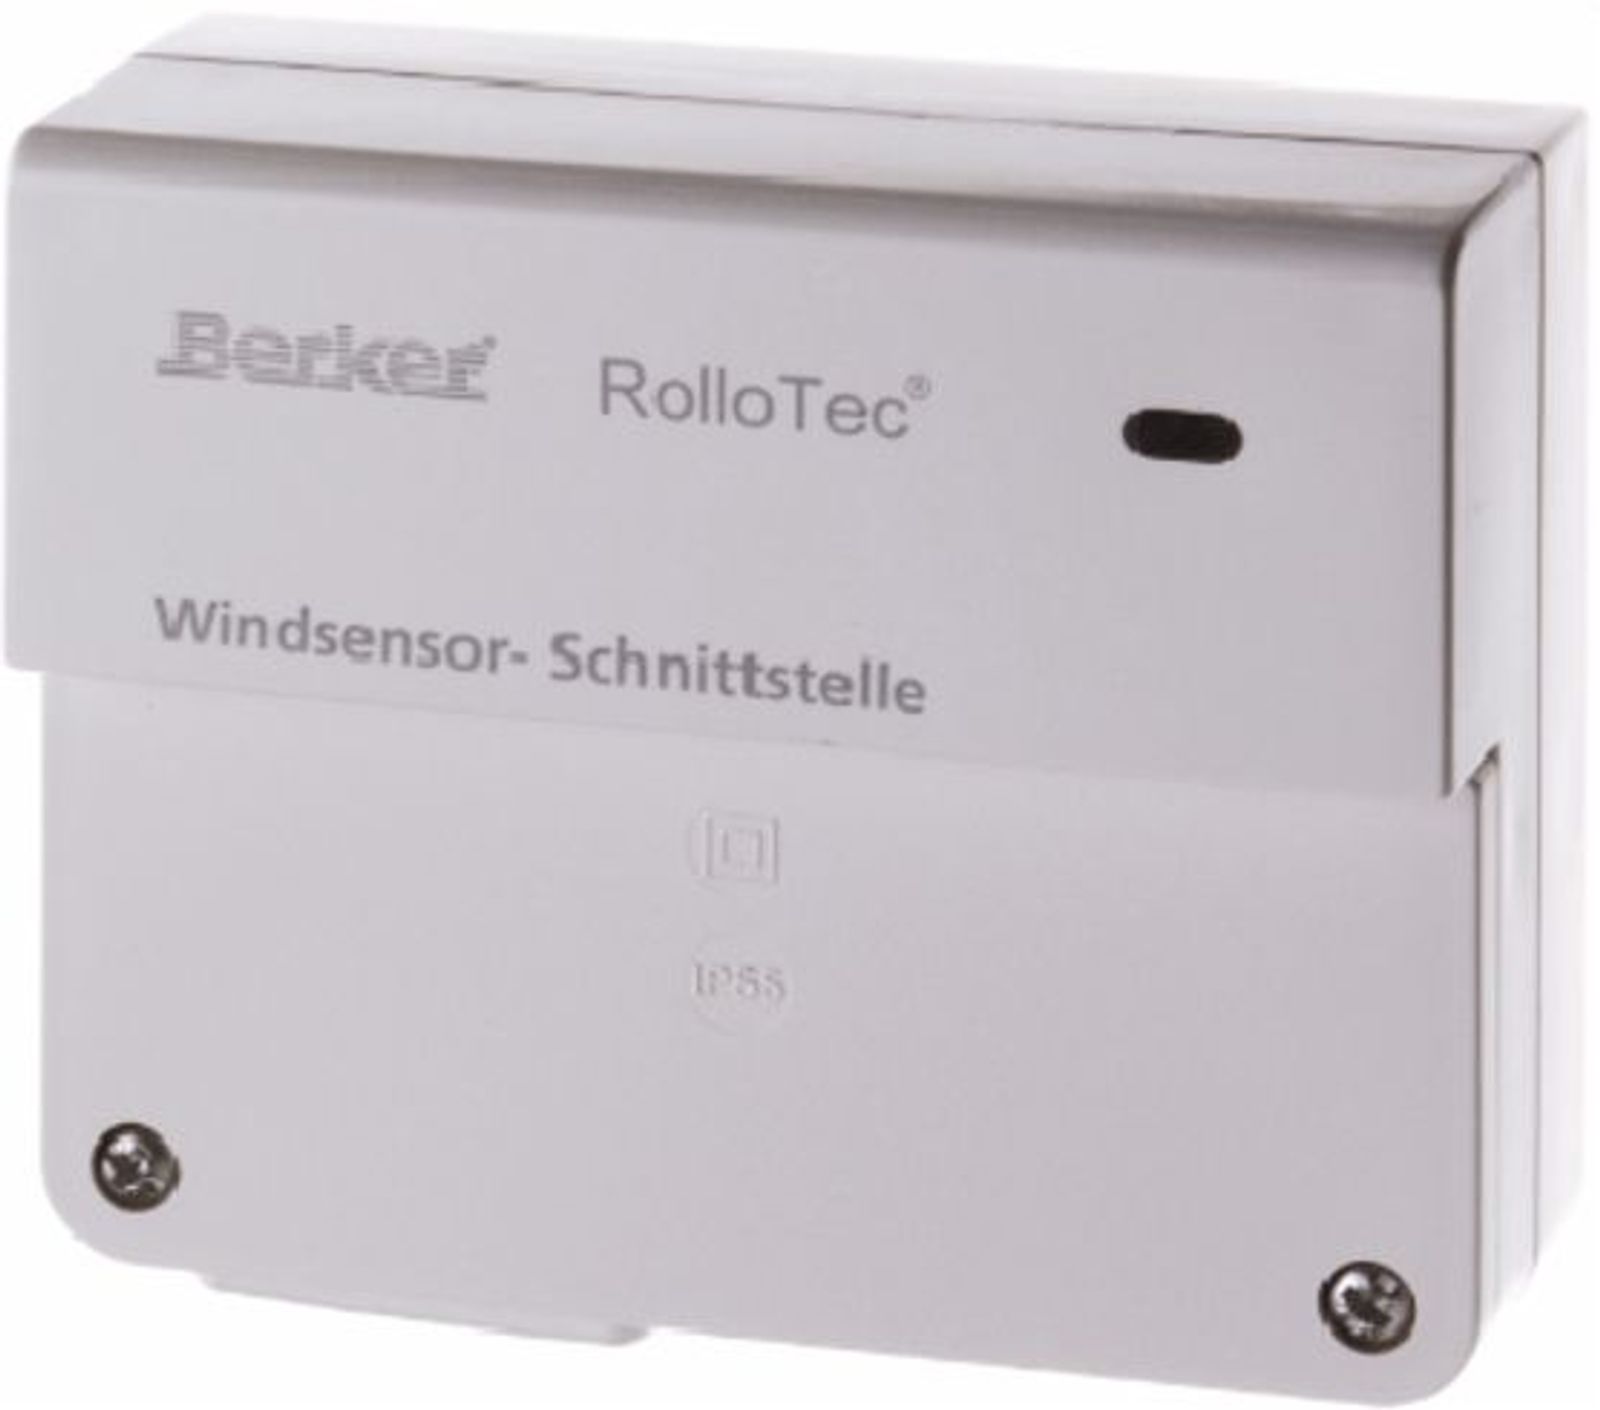 Berker 173 RolloTec Windsensor-Schnittstelle Hauselektronik polarweiß